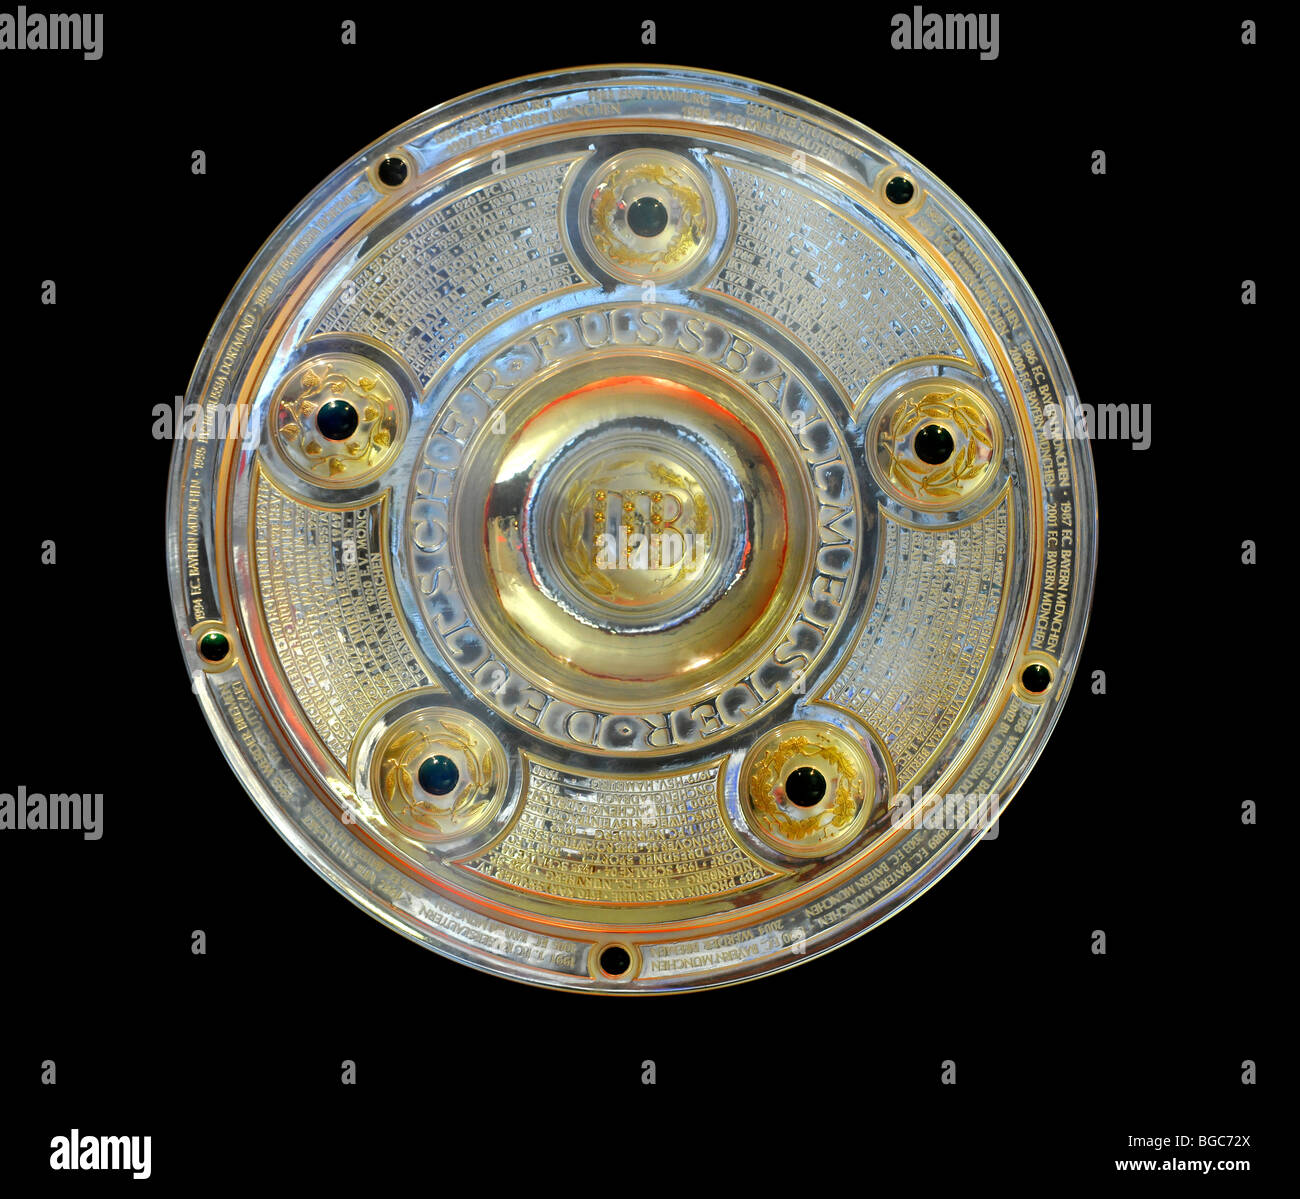 Meisterschale, Deutsche Bundesliga German football league championship  trophy, cut-out Stock Photo - Alamy